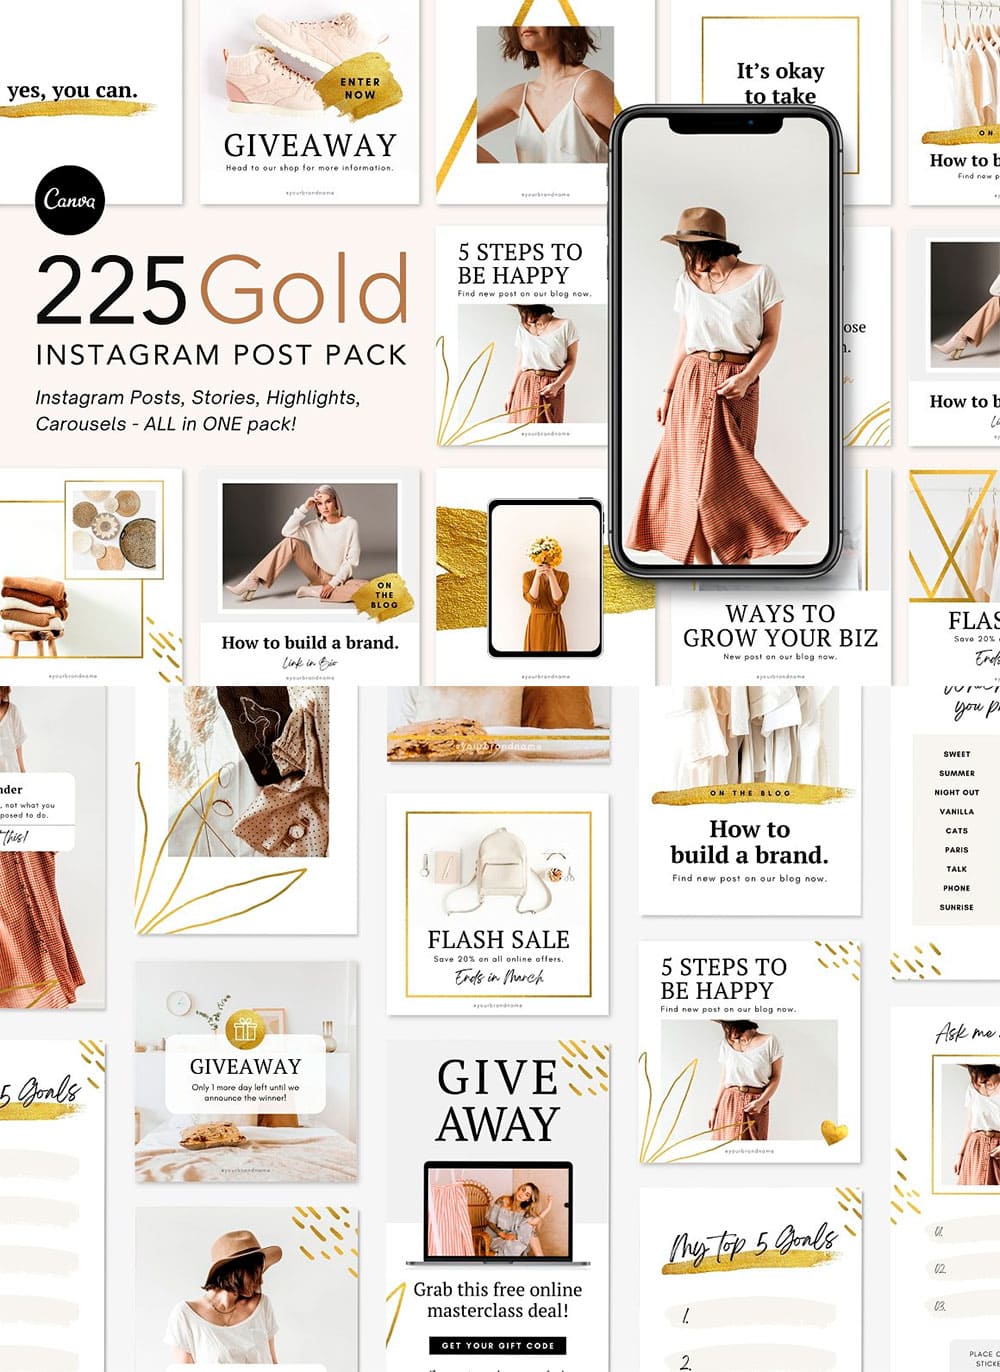 Gold instagram post pack canva, image for pinterest.